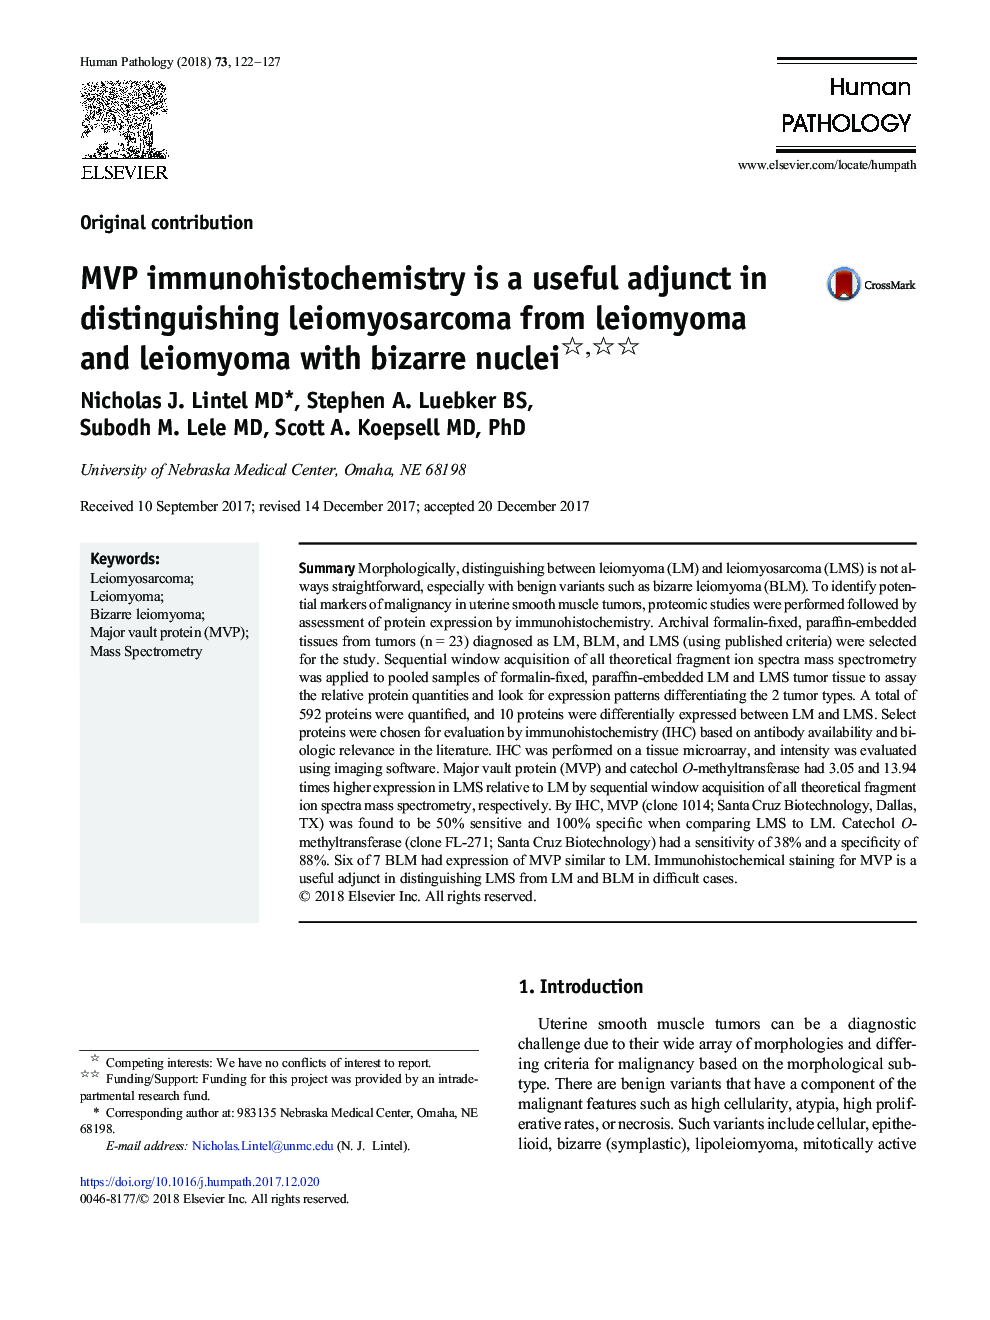 MVP immunohistochemistry is a useful adjunct in distinguishing leiomyosarcoma from leiomyoma and leiomyoma with bizarre nuclei